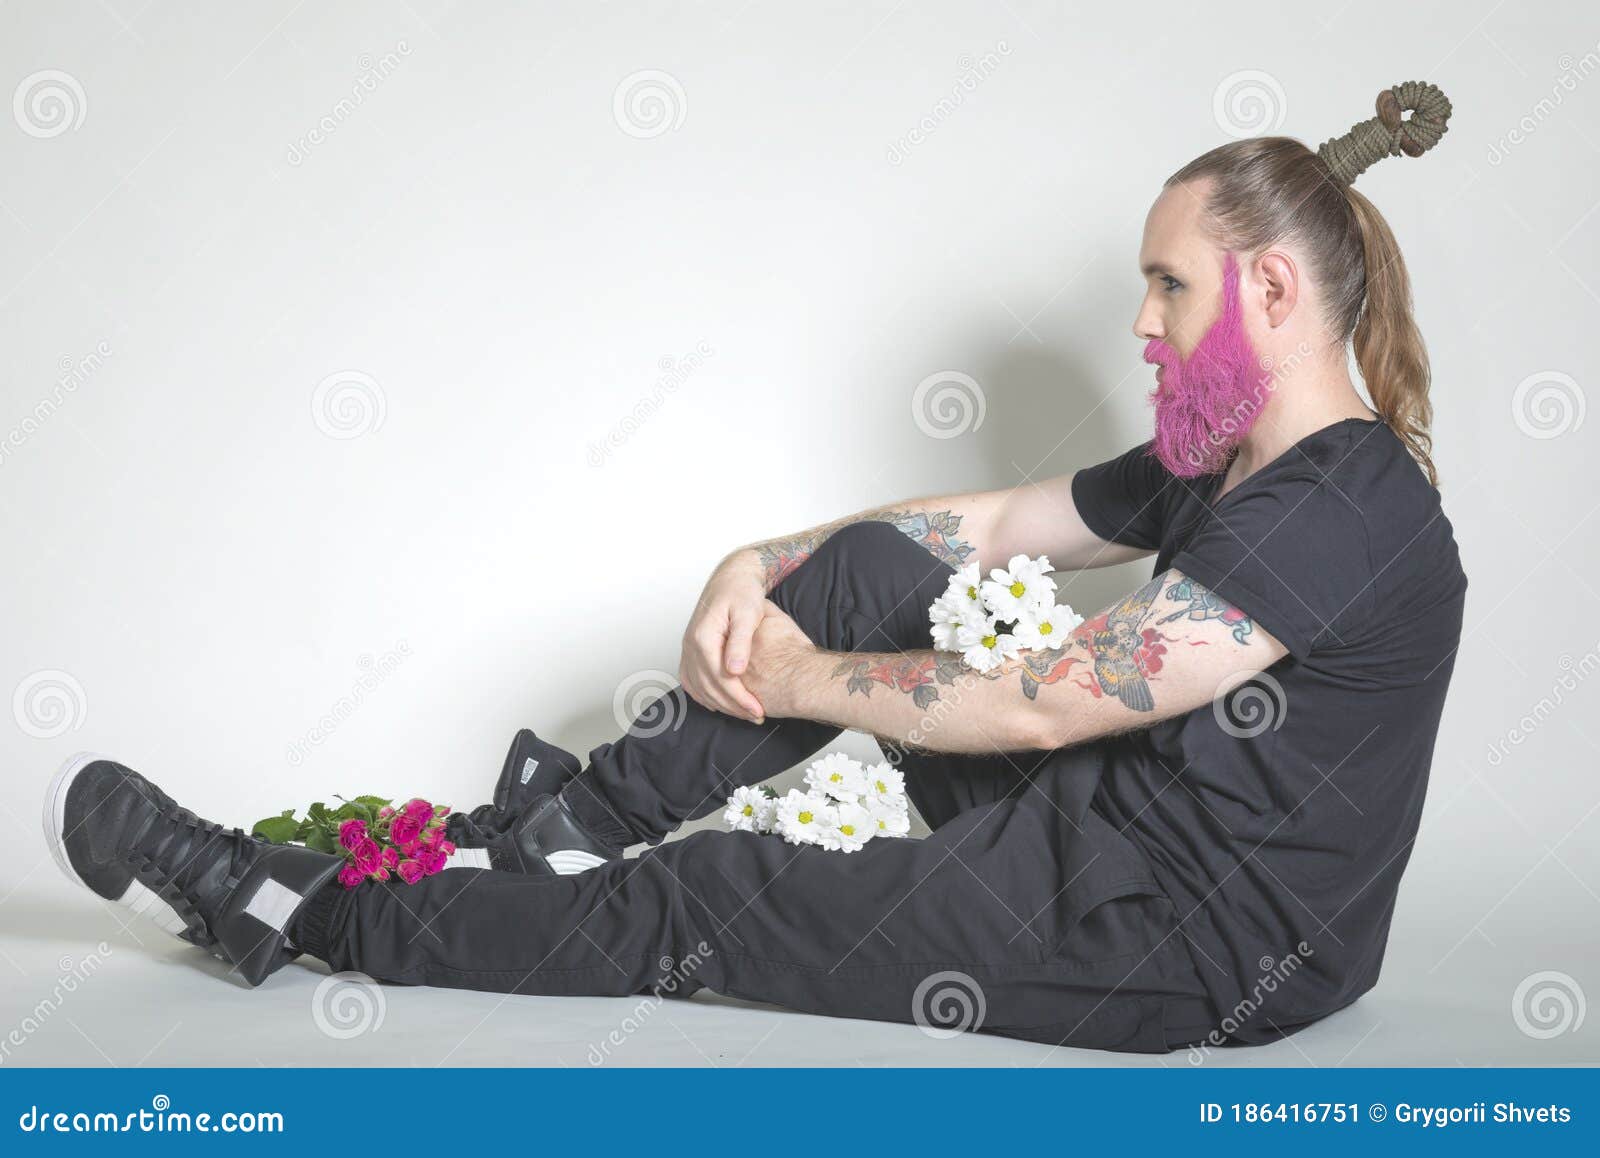 Blue Hair Pink Beard Guy - Google Images - wide 6